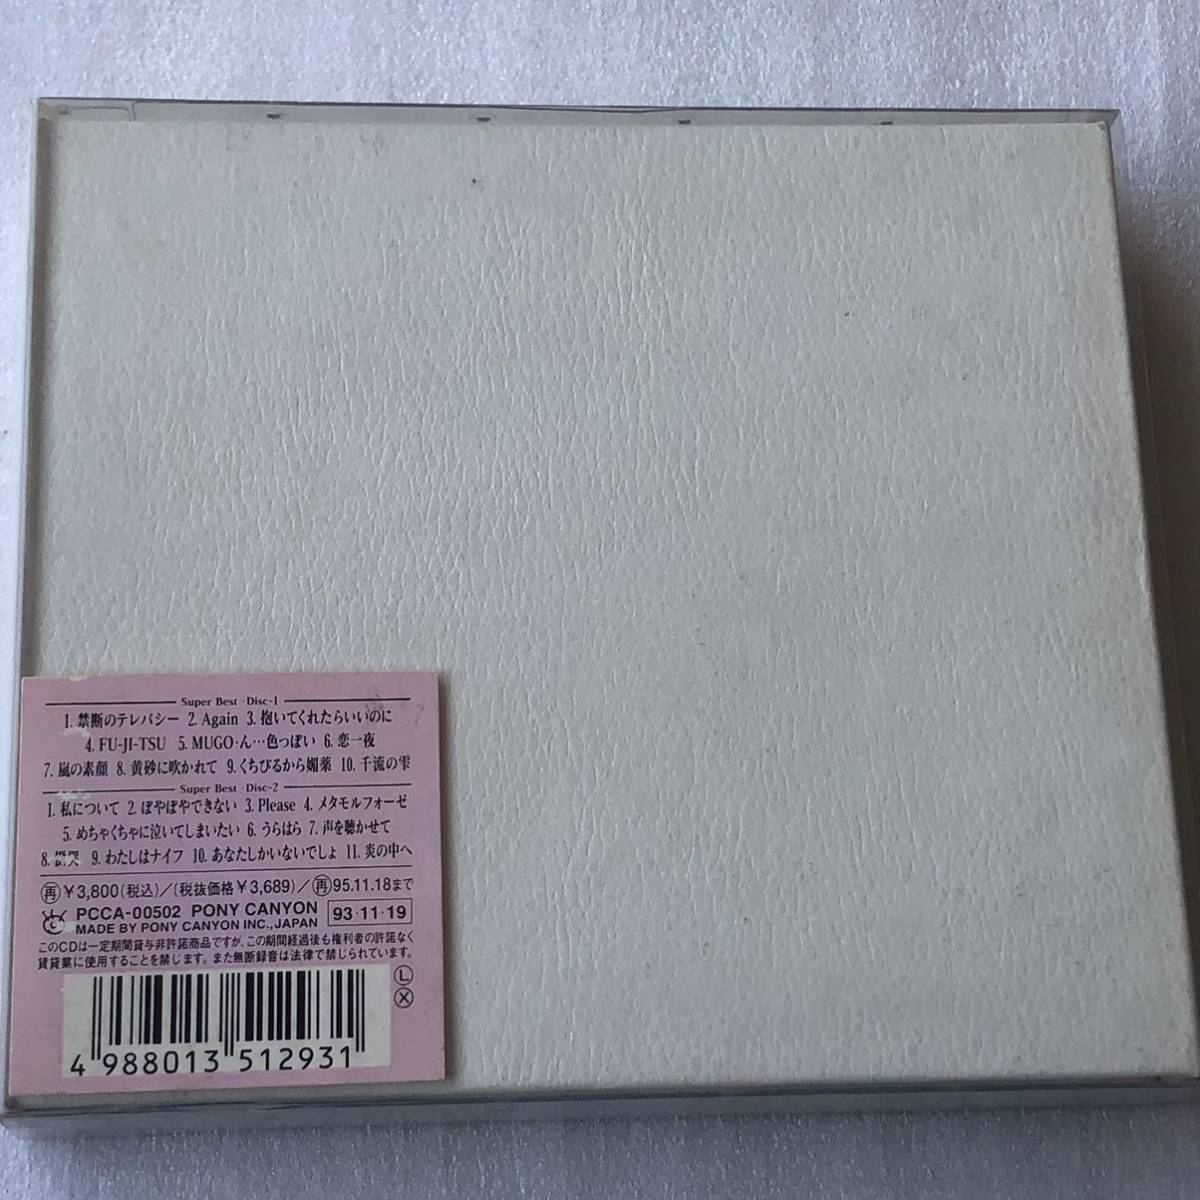  used CD Kudo Shizuka /Super Best( first record 2CD) (1993 year )